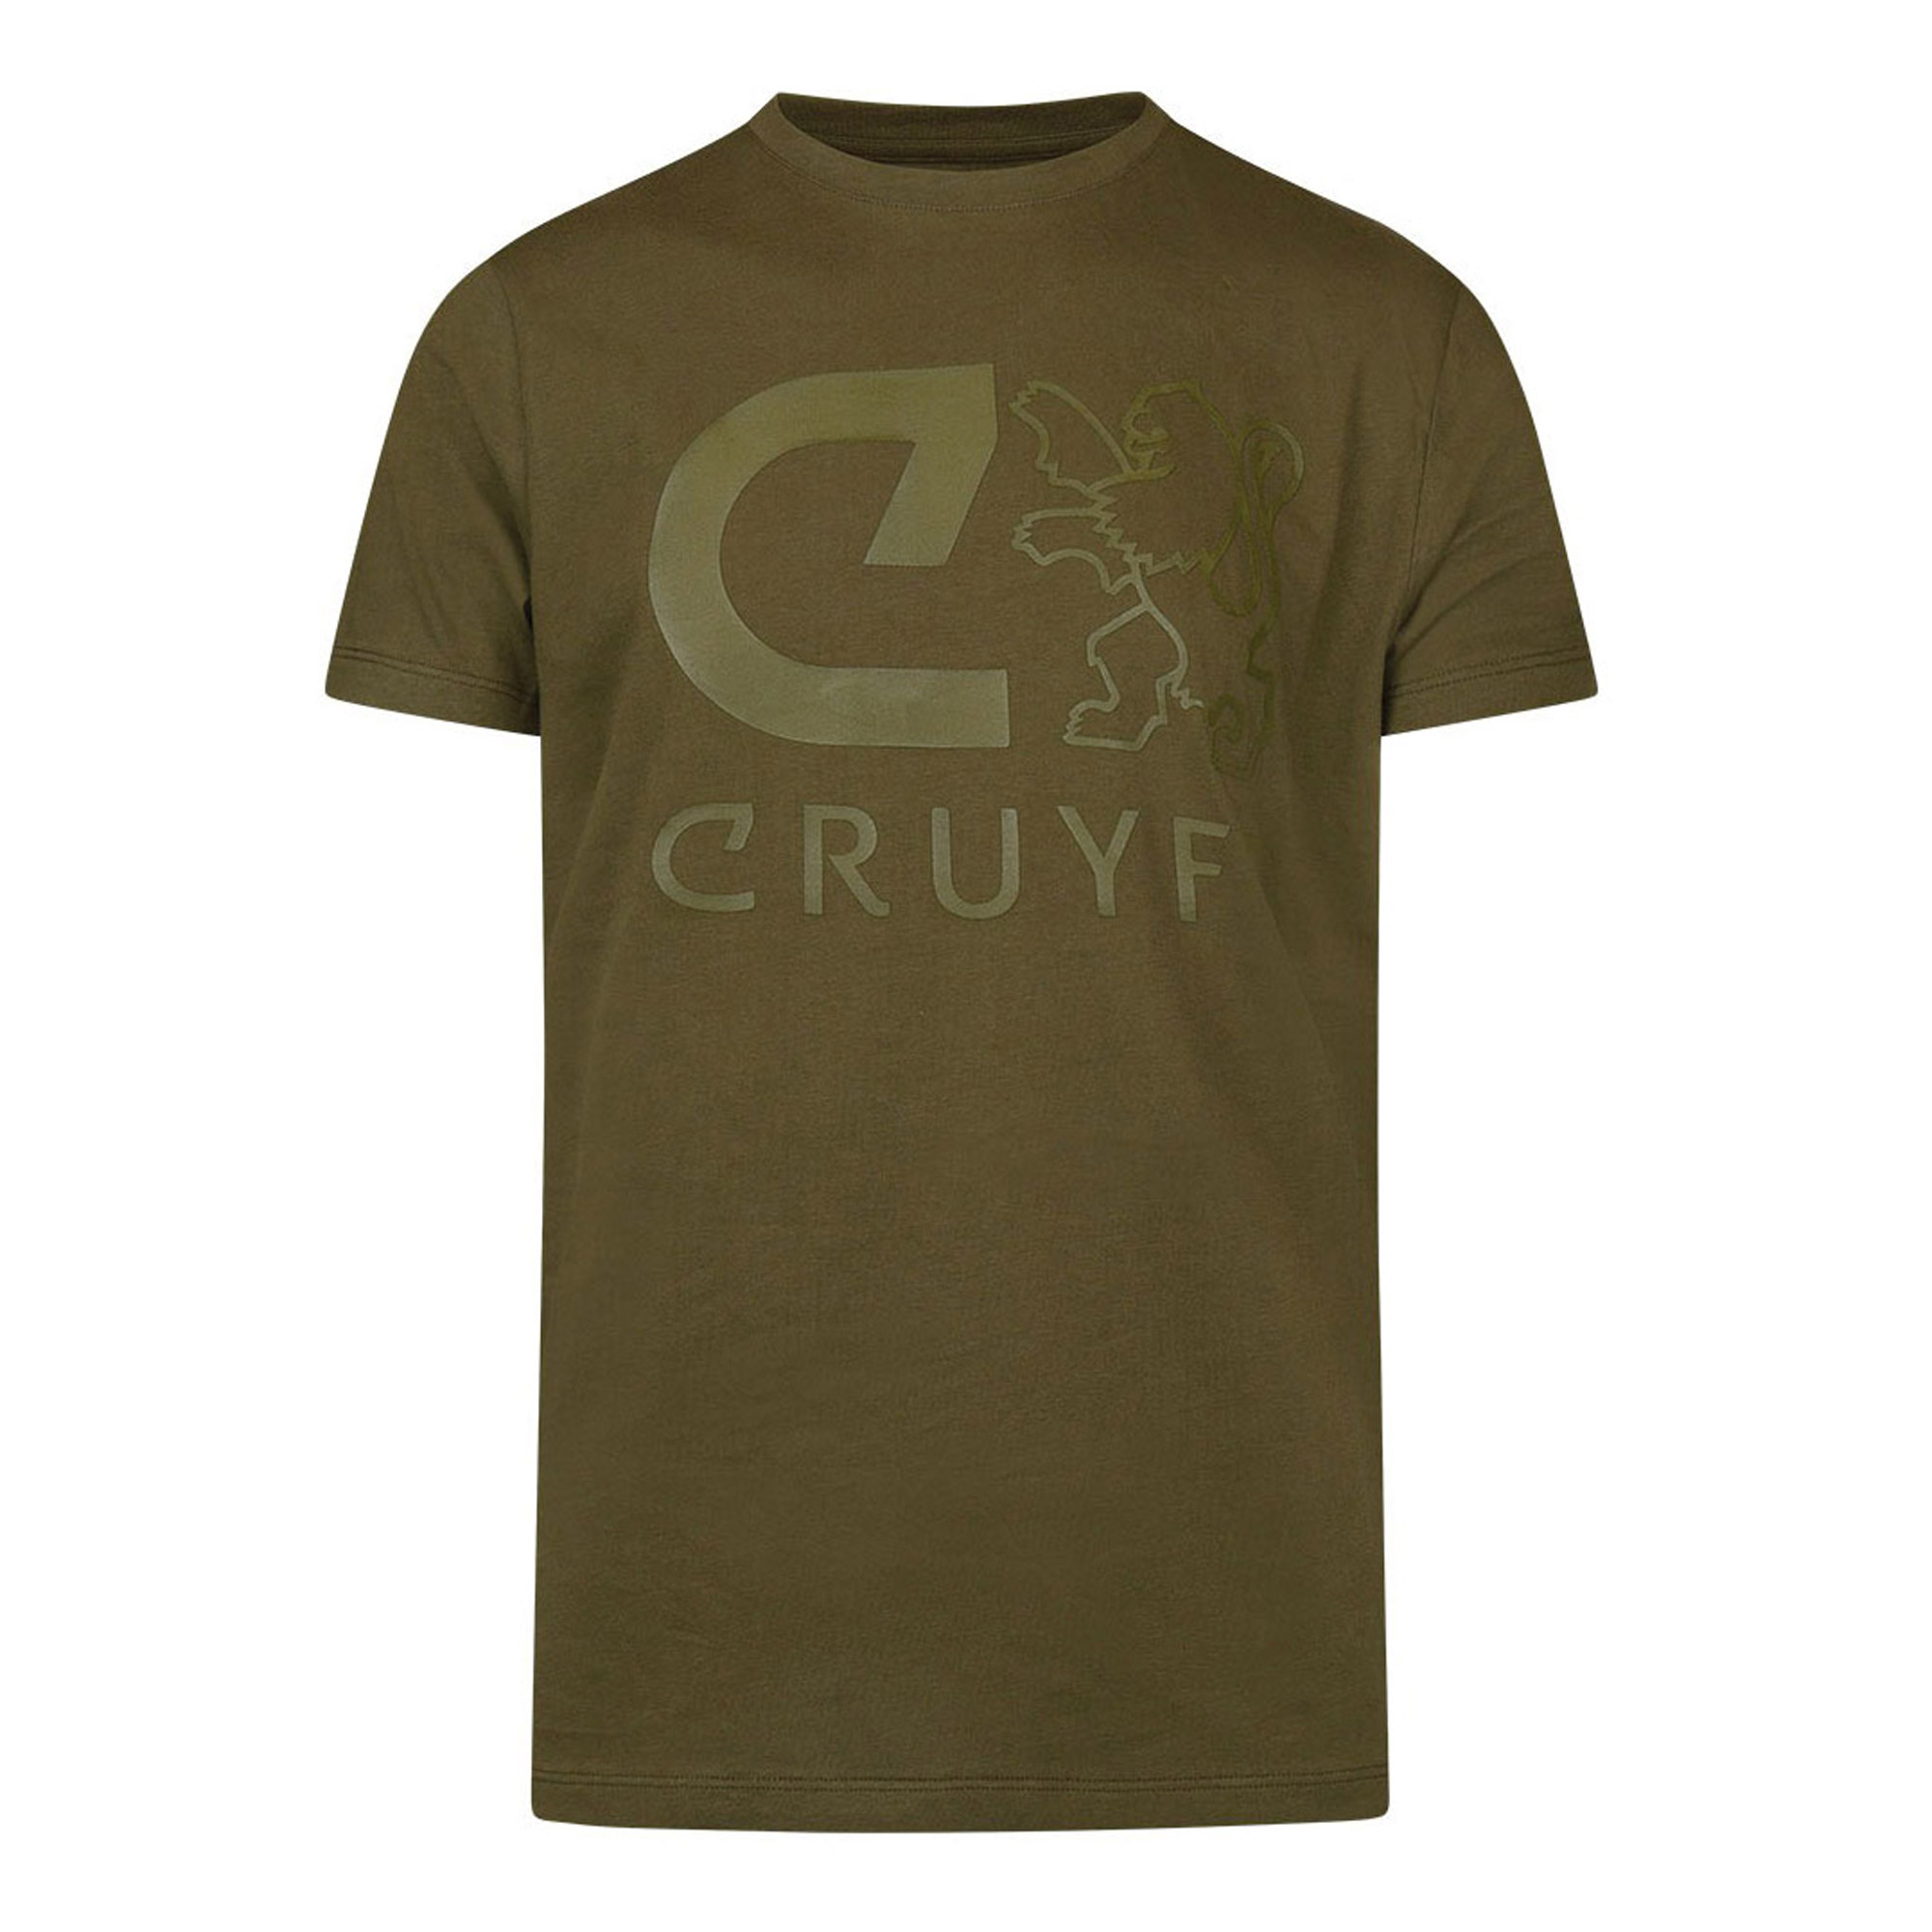 T-shirt Cruyff Hernandez